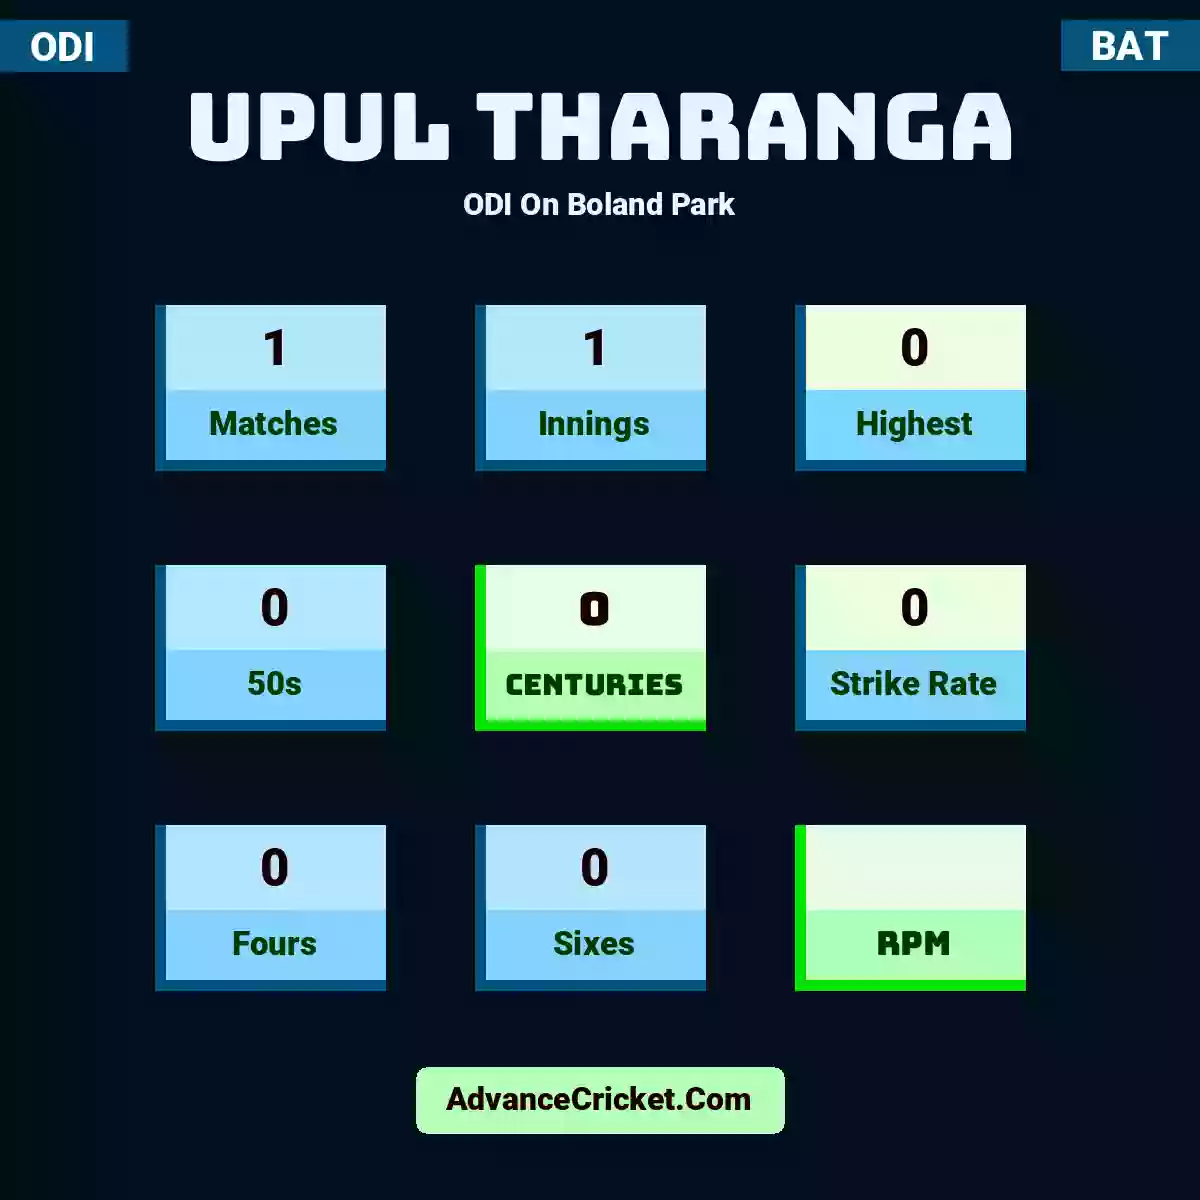 Upul Tharanga ODI  On Boland Park, Upul Tharanga played 1 matches, scored 0 runs as highest, 0 half-centuries, and 0 centuries, with a strike rate of 0. U.Tharanga hit 0 fours and 0 sixes.